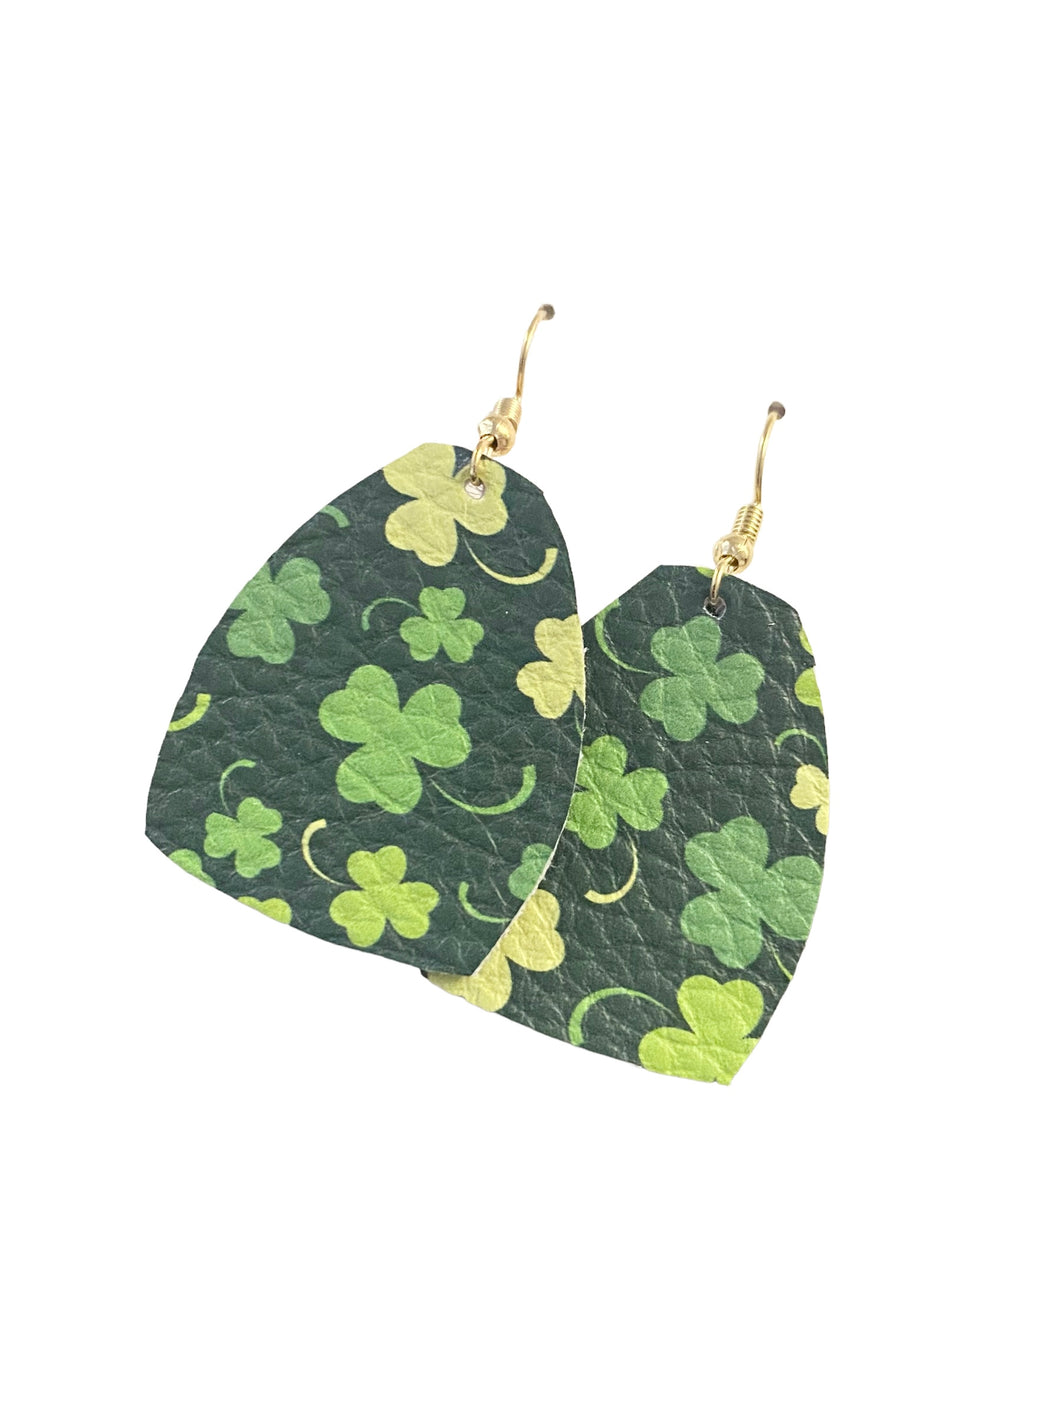 St. Patrick’s Day Wedge Earrings